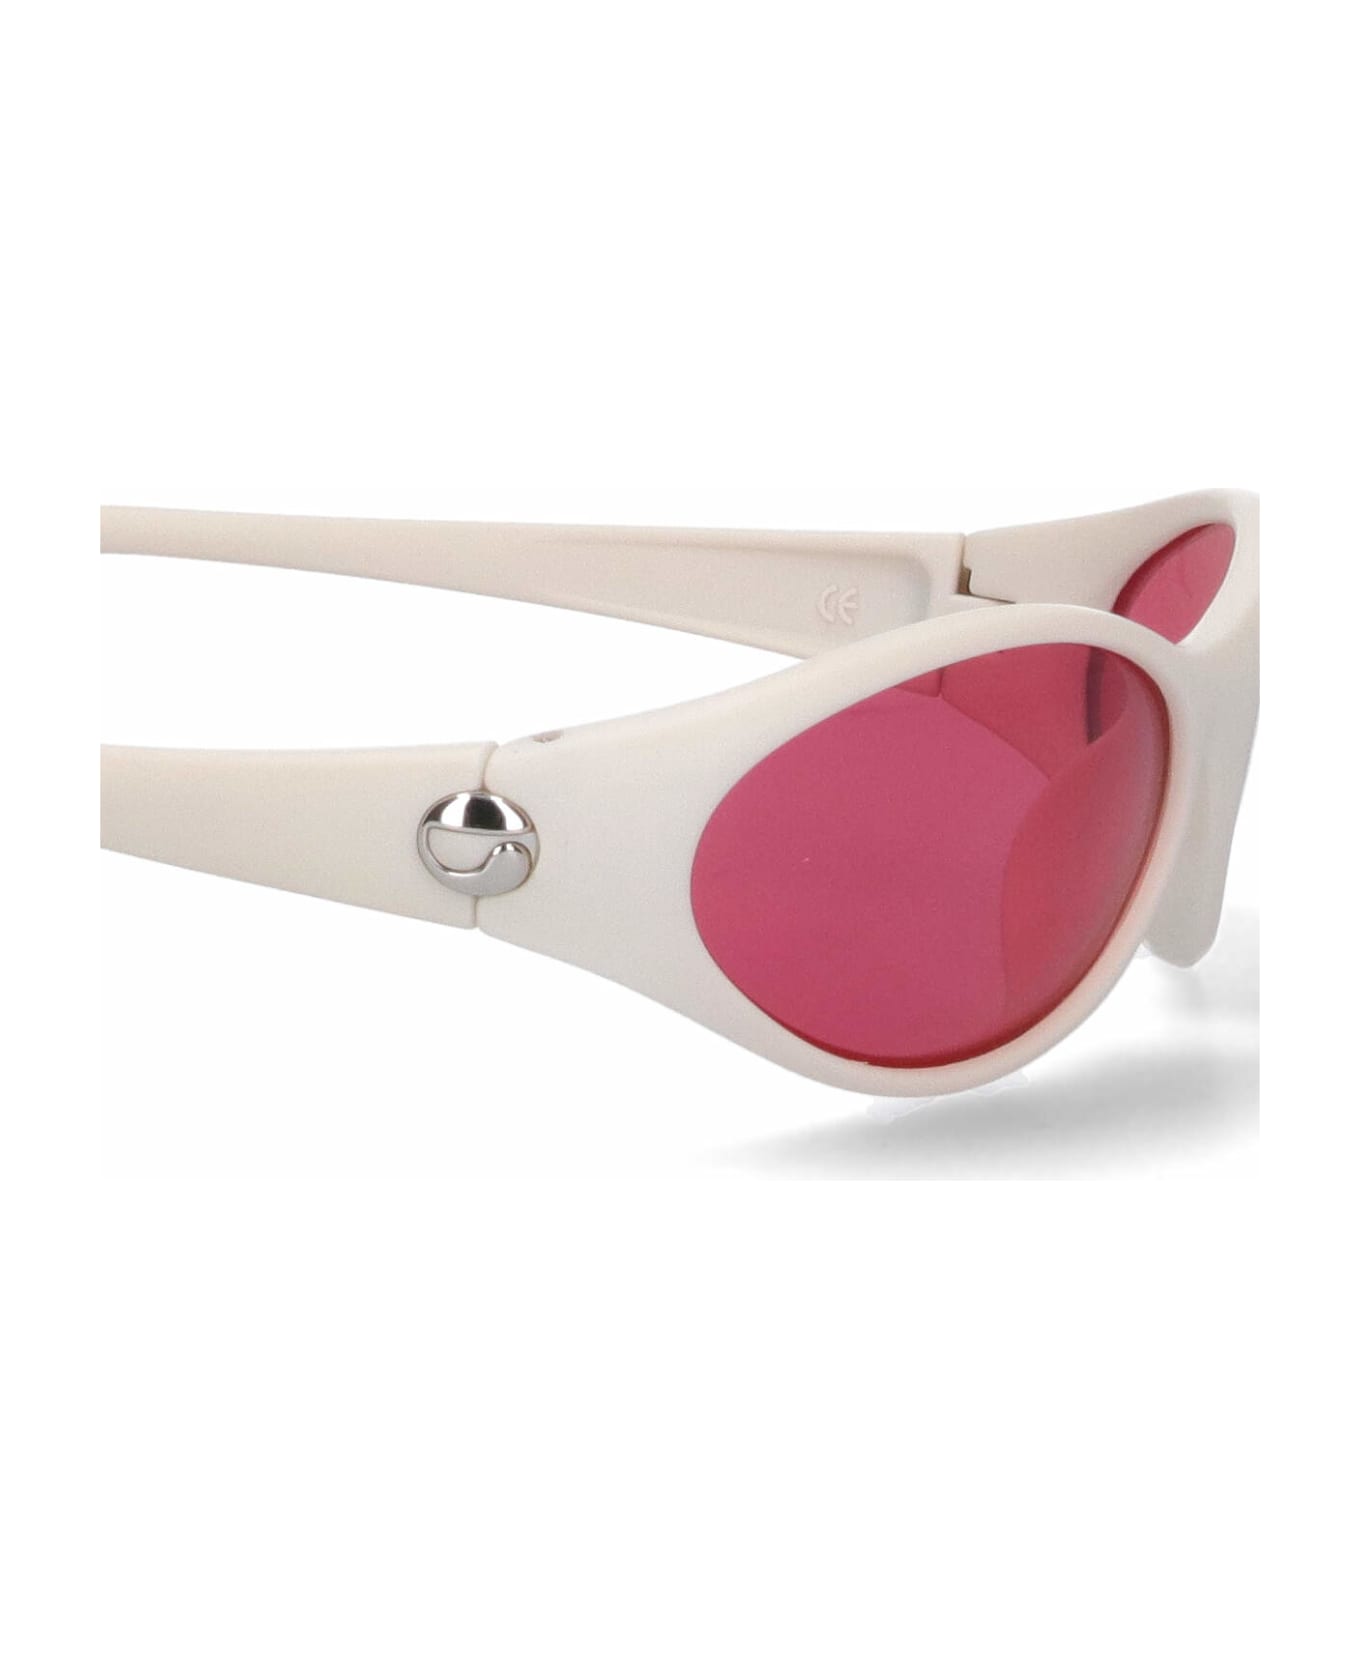 Coperni 'cycling' Sunglasses - White